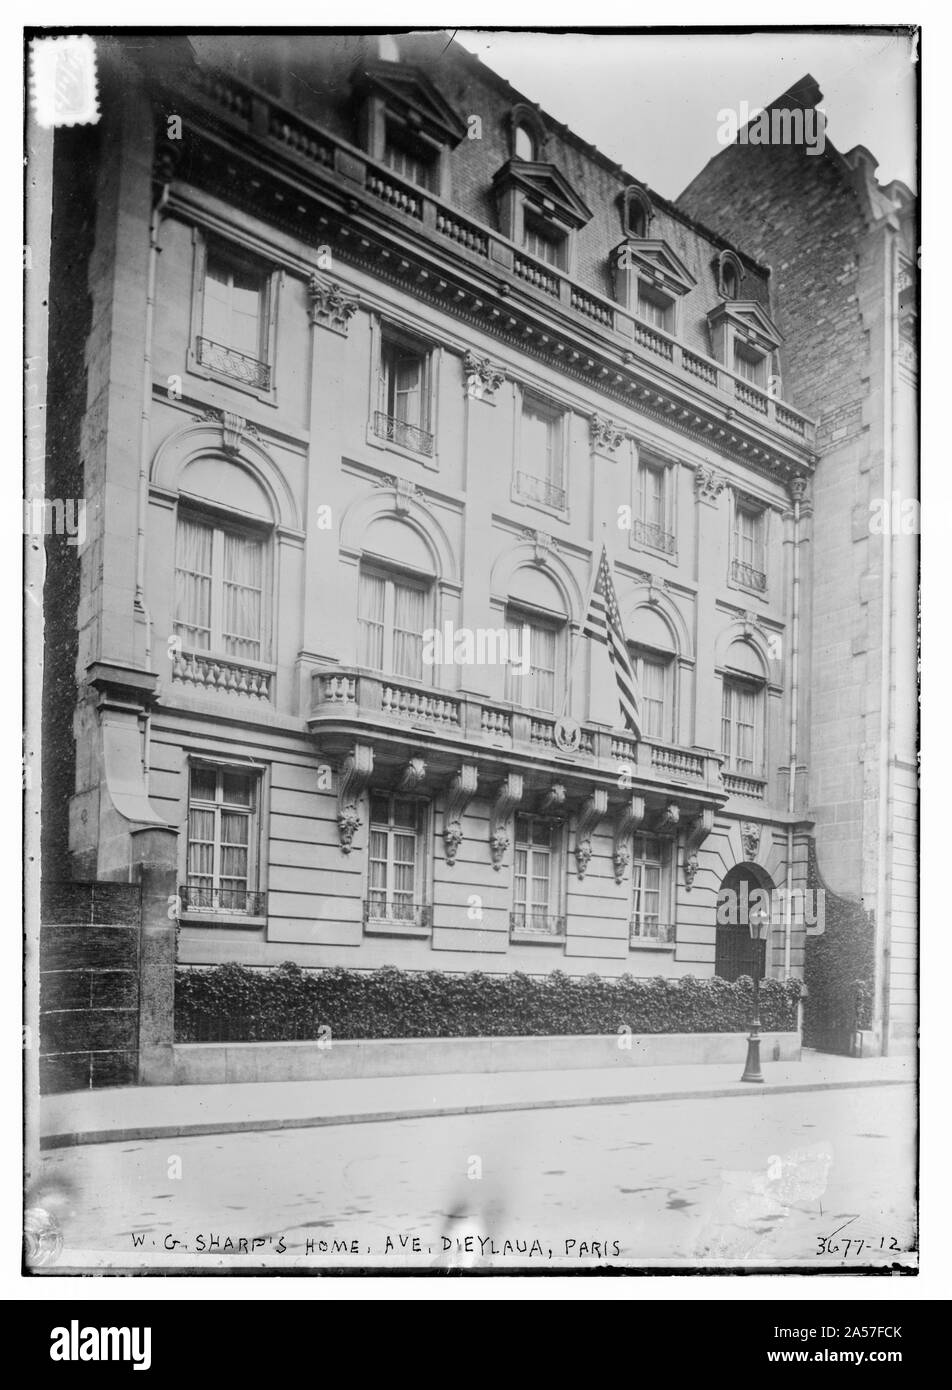 W.G. Sharp's home, Ave. d'Eylaua [i.e., d'Eylau], Paris Stock Photo